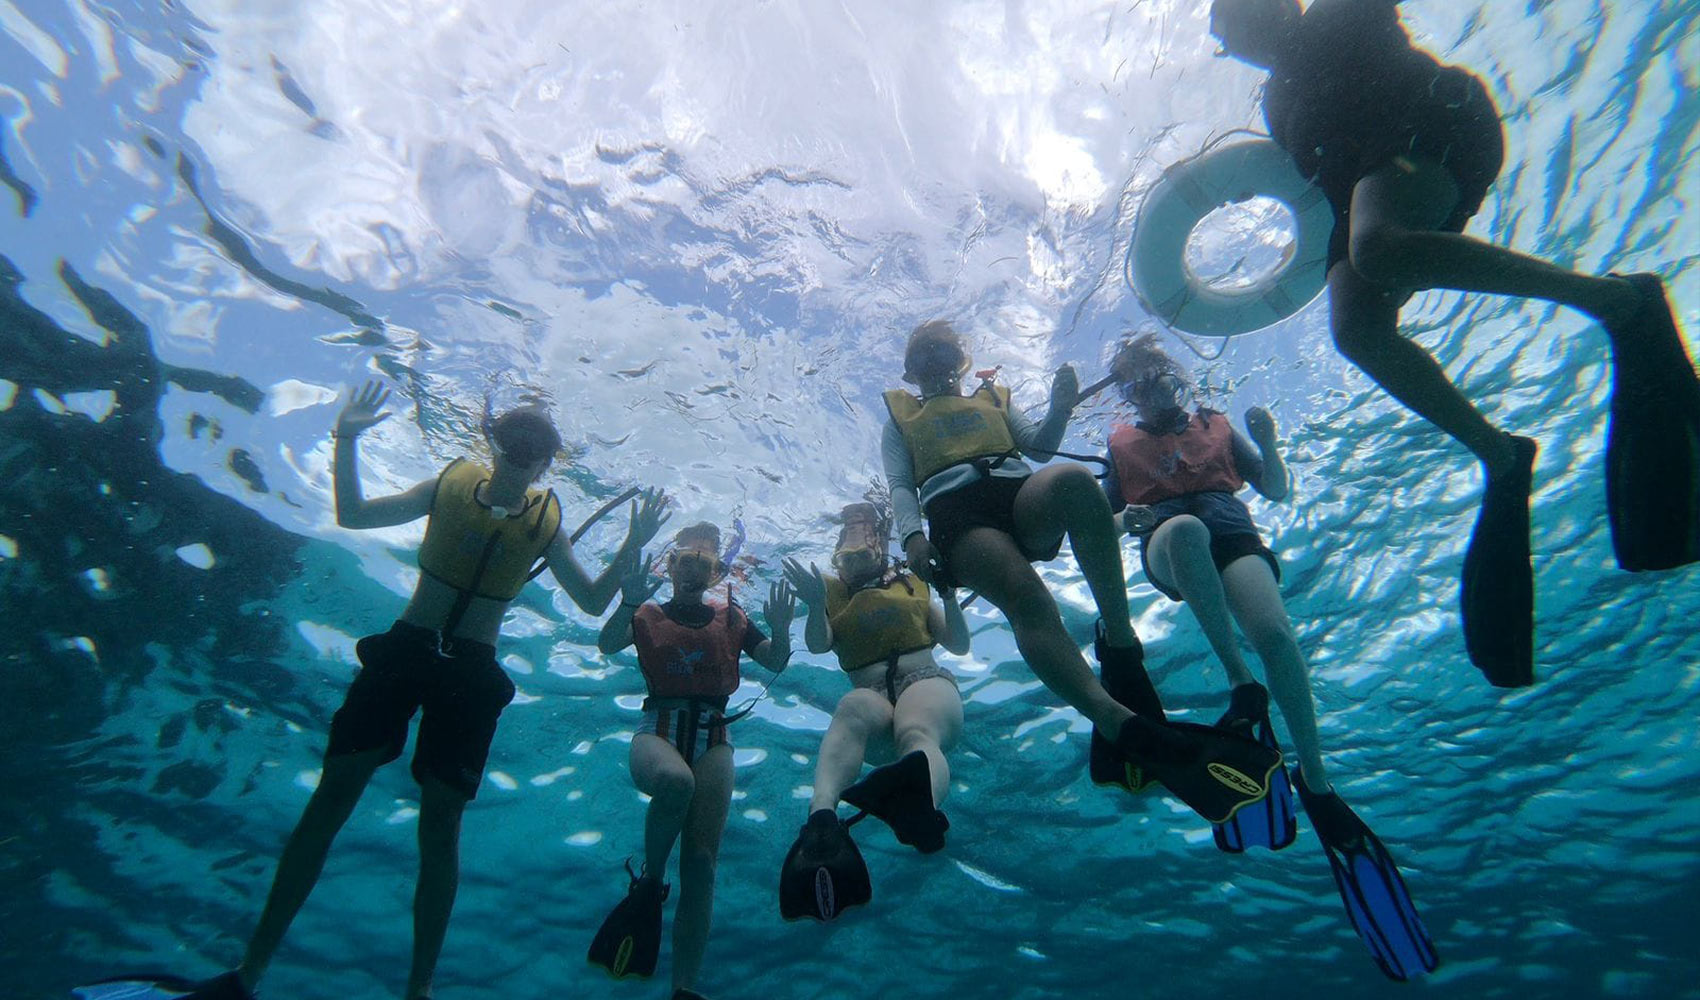 Belize Snorkeling Tours